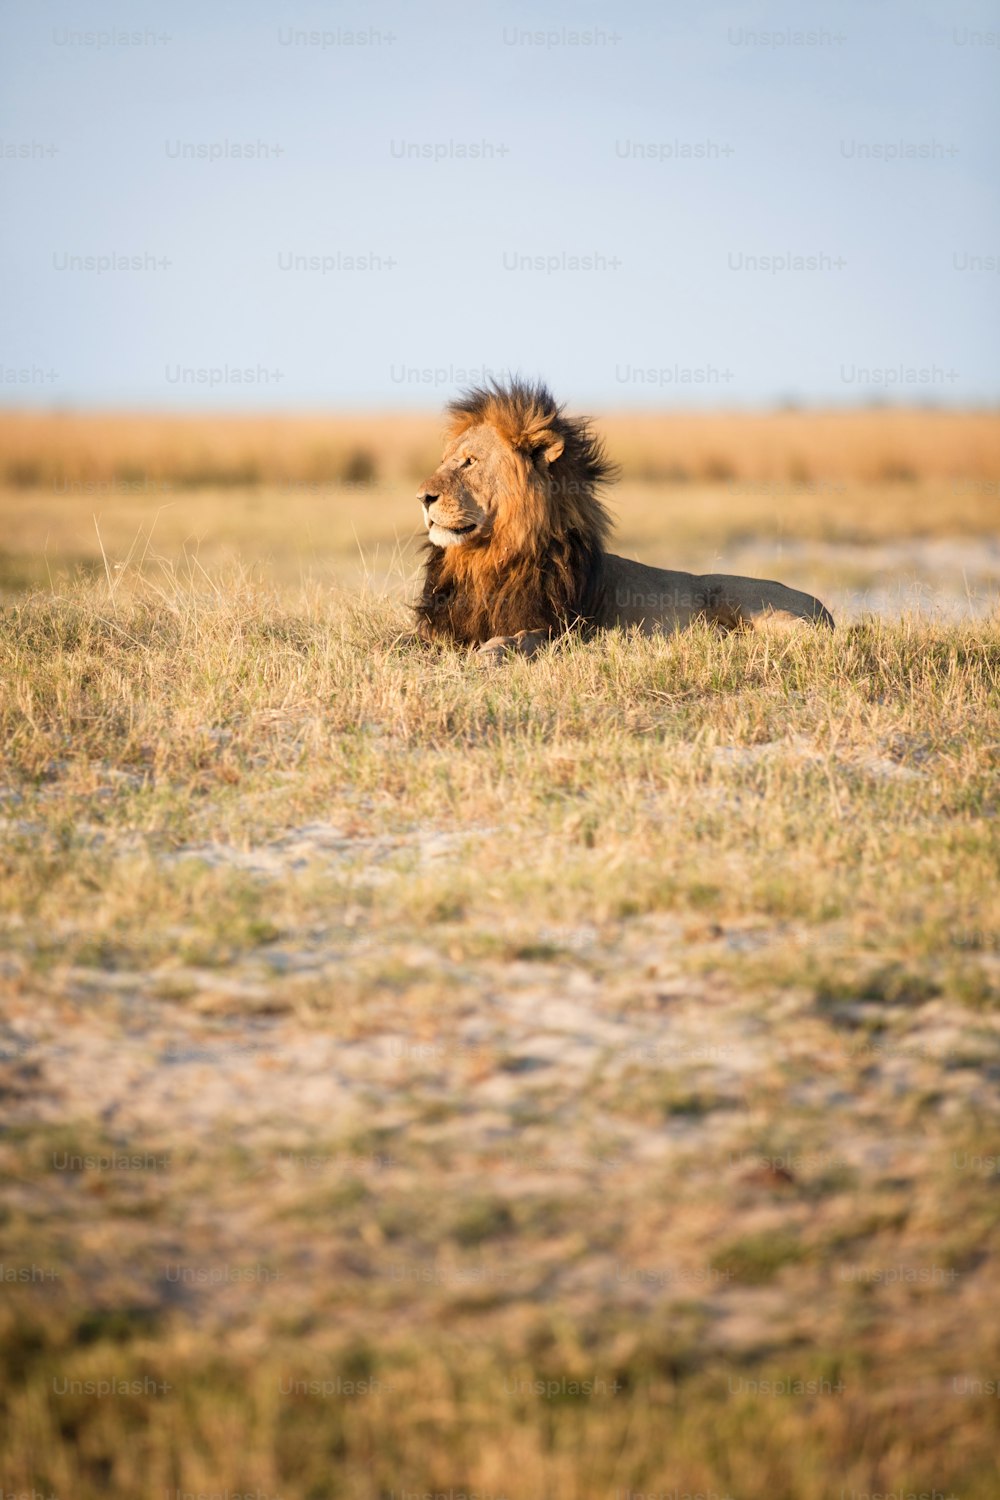 Grand lion mâle